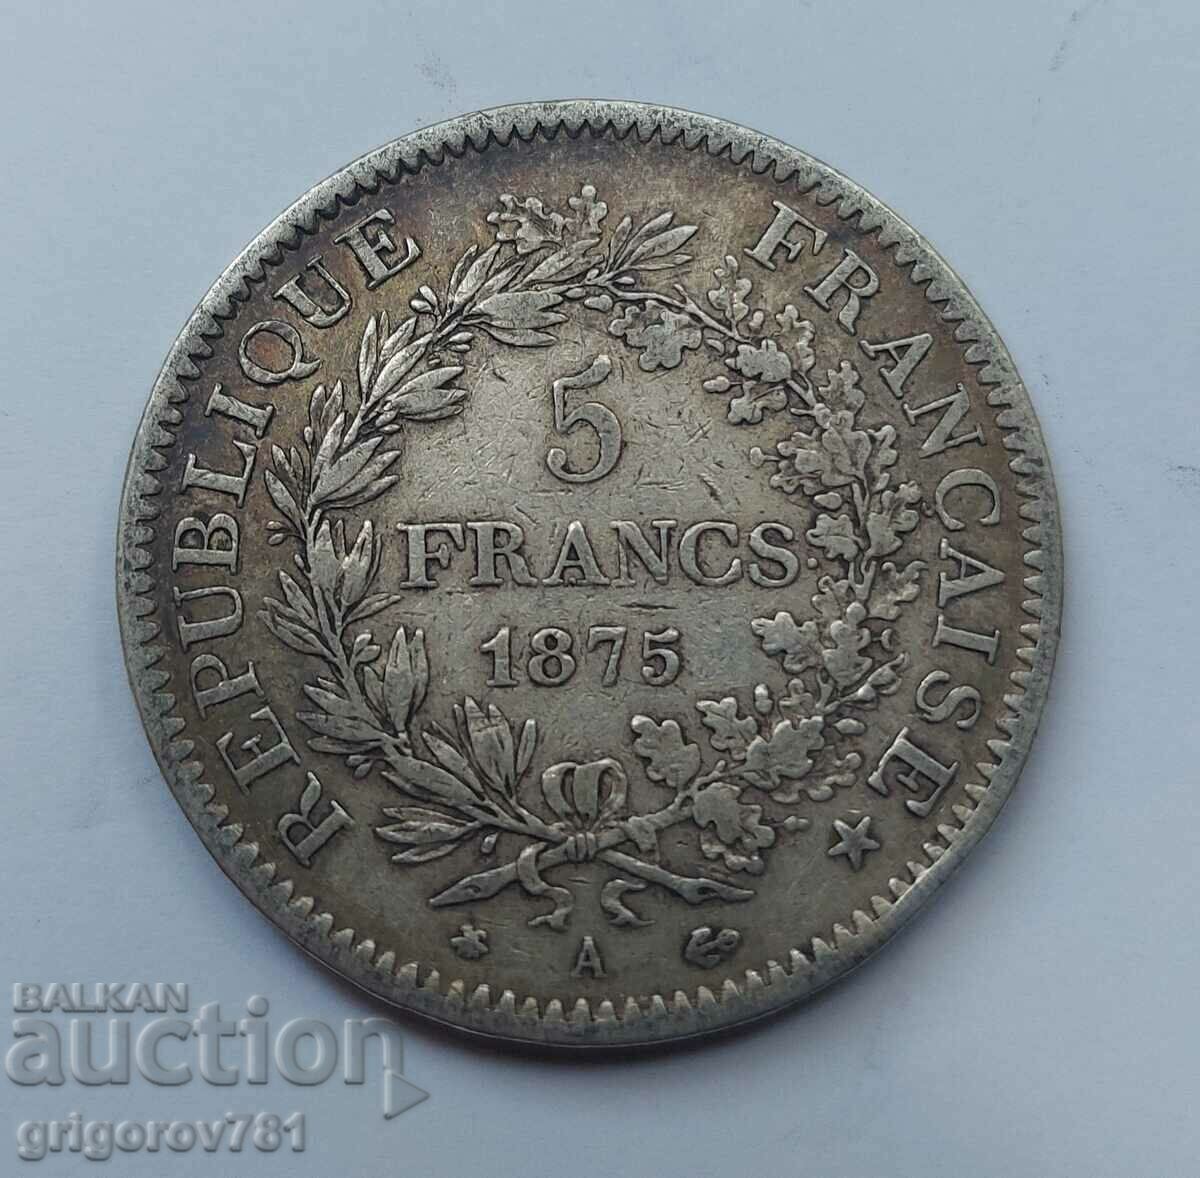 5 Francs Silver France 1875 A - Silver Coin #243